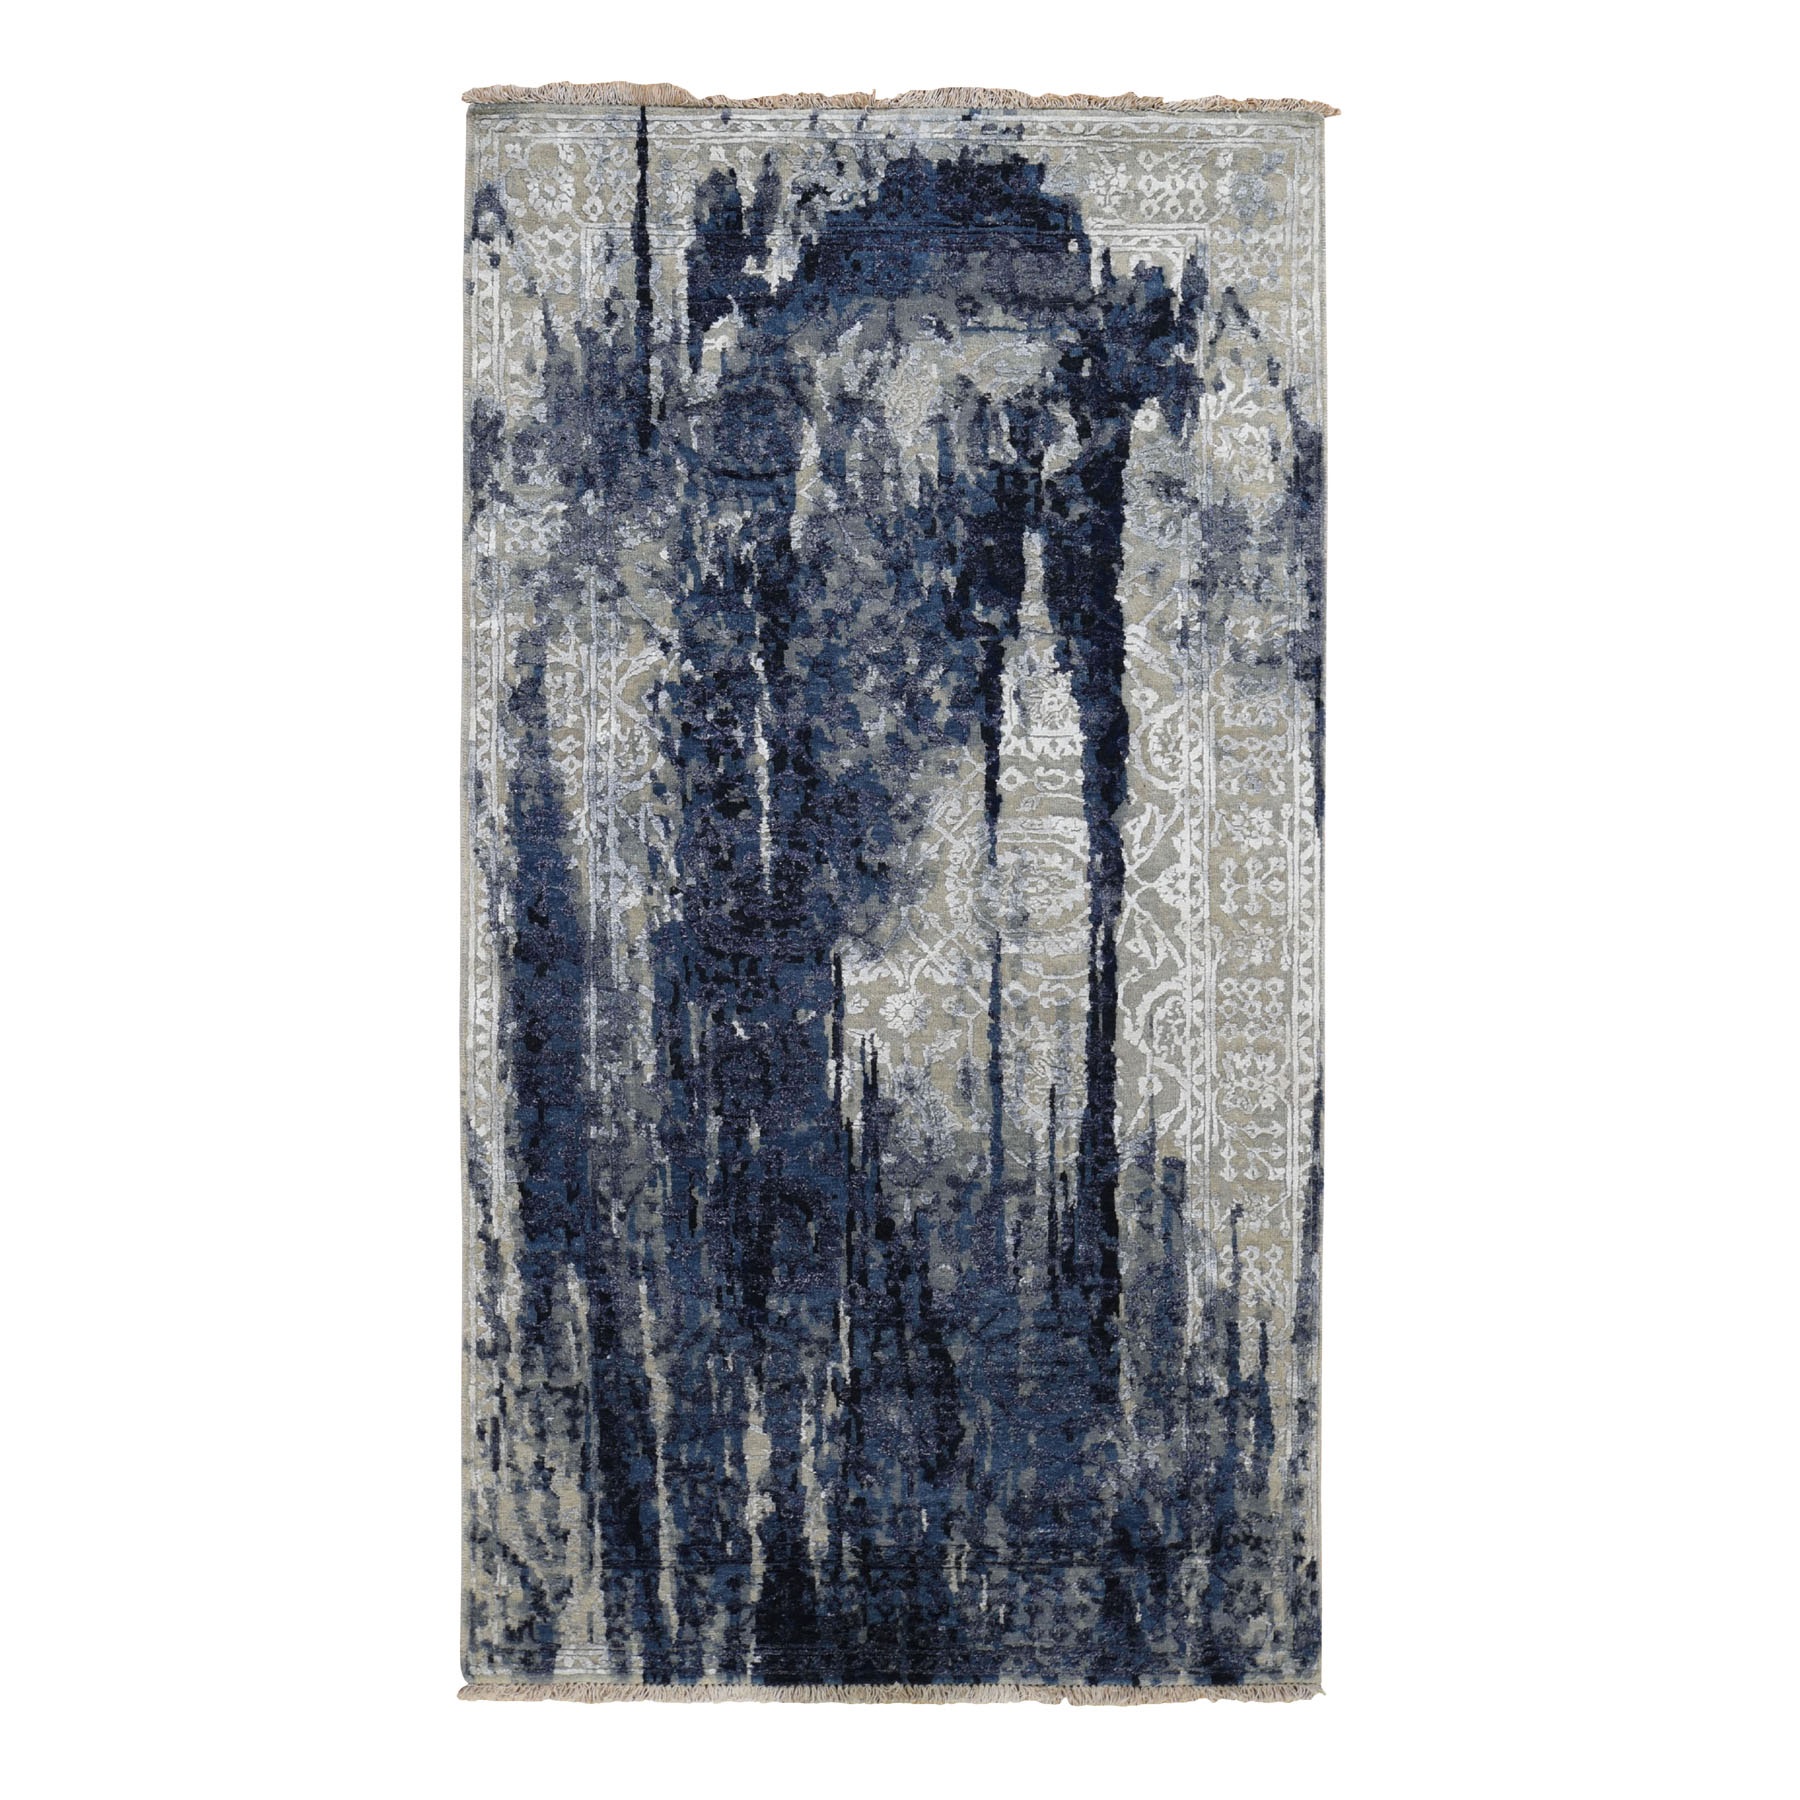 4'x8' Gallery Size Wool And Silk Shibori Design Tone On Tone Hand Woven Oriental Rug 